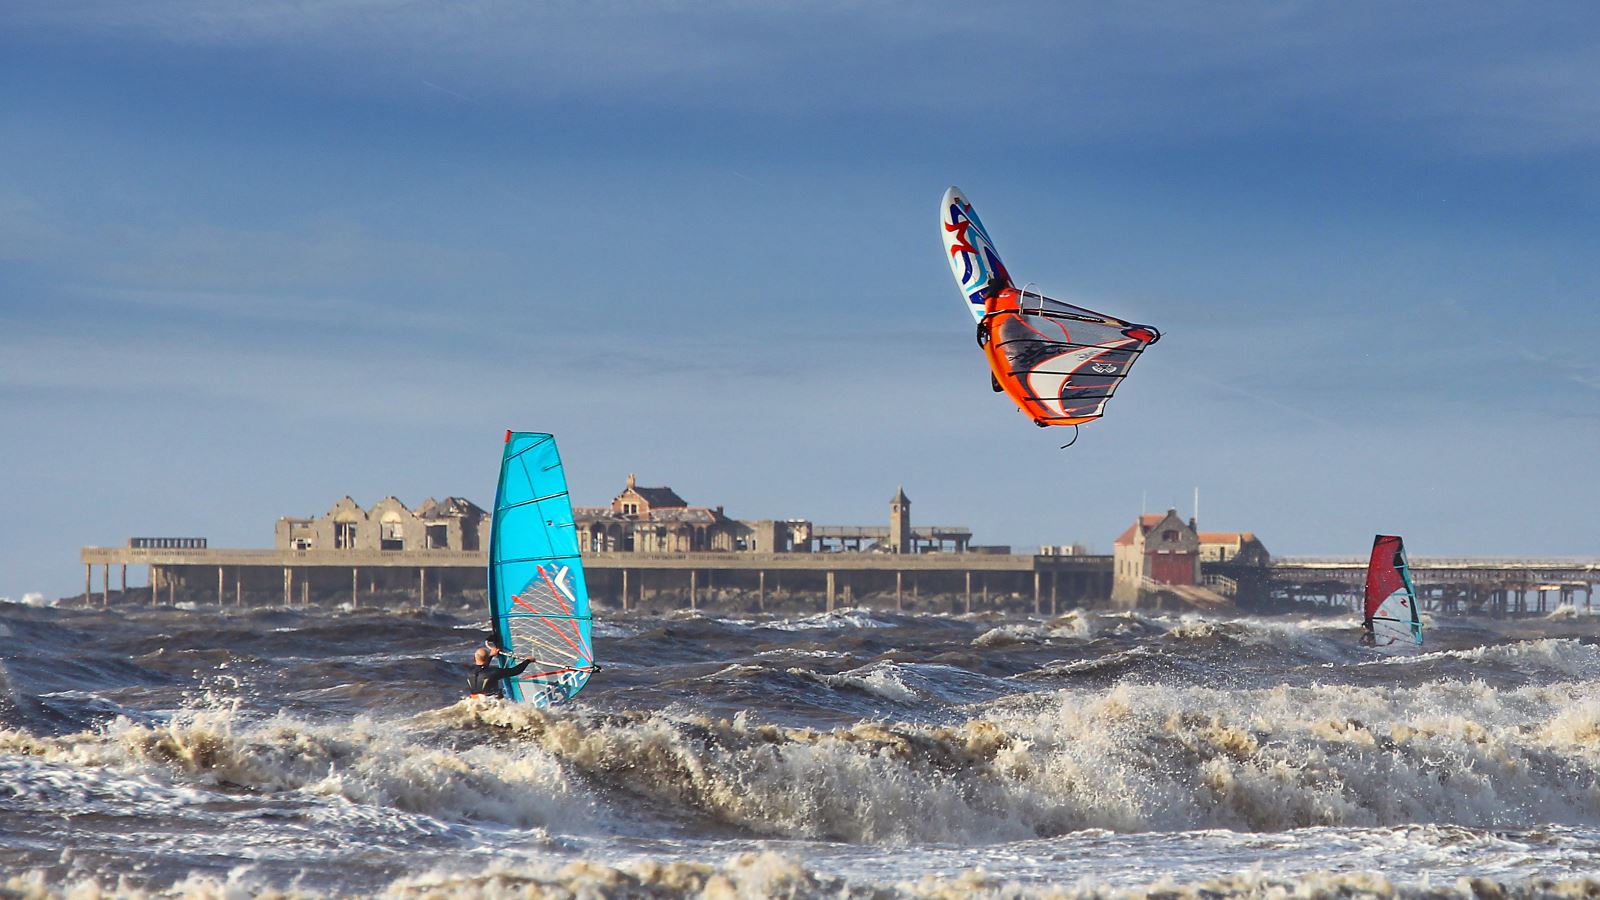 Weston windsurfers